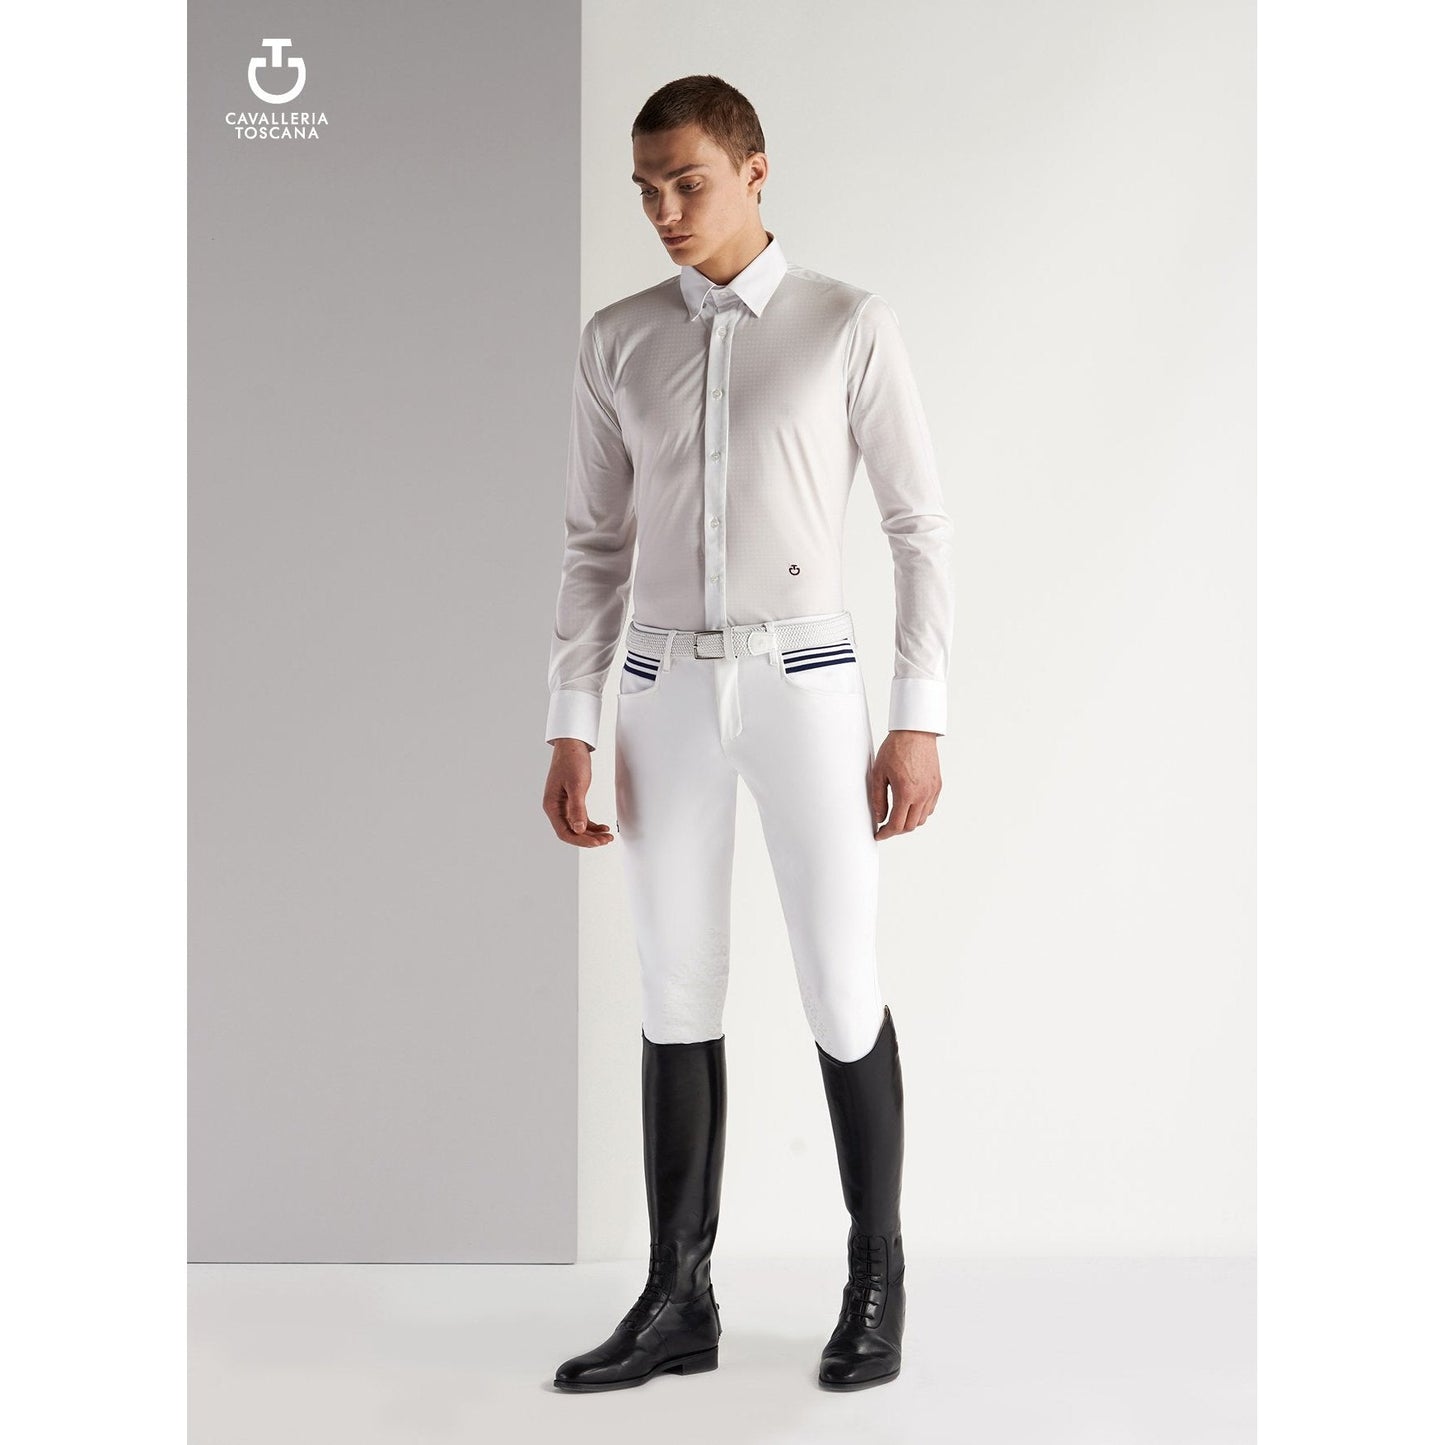 Cavalleria Toscana Guibert Shirt Long Sleeve-Trailrace Equestrian Outfitters-The Equestrian